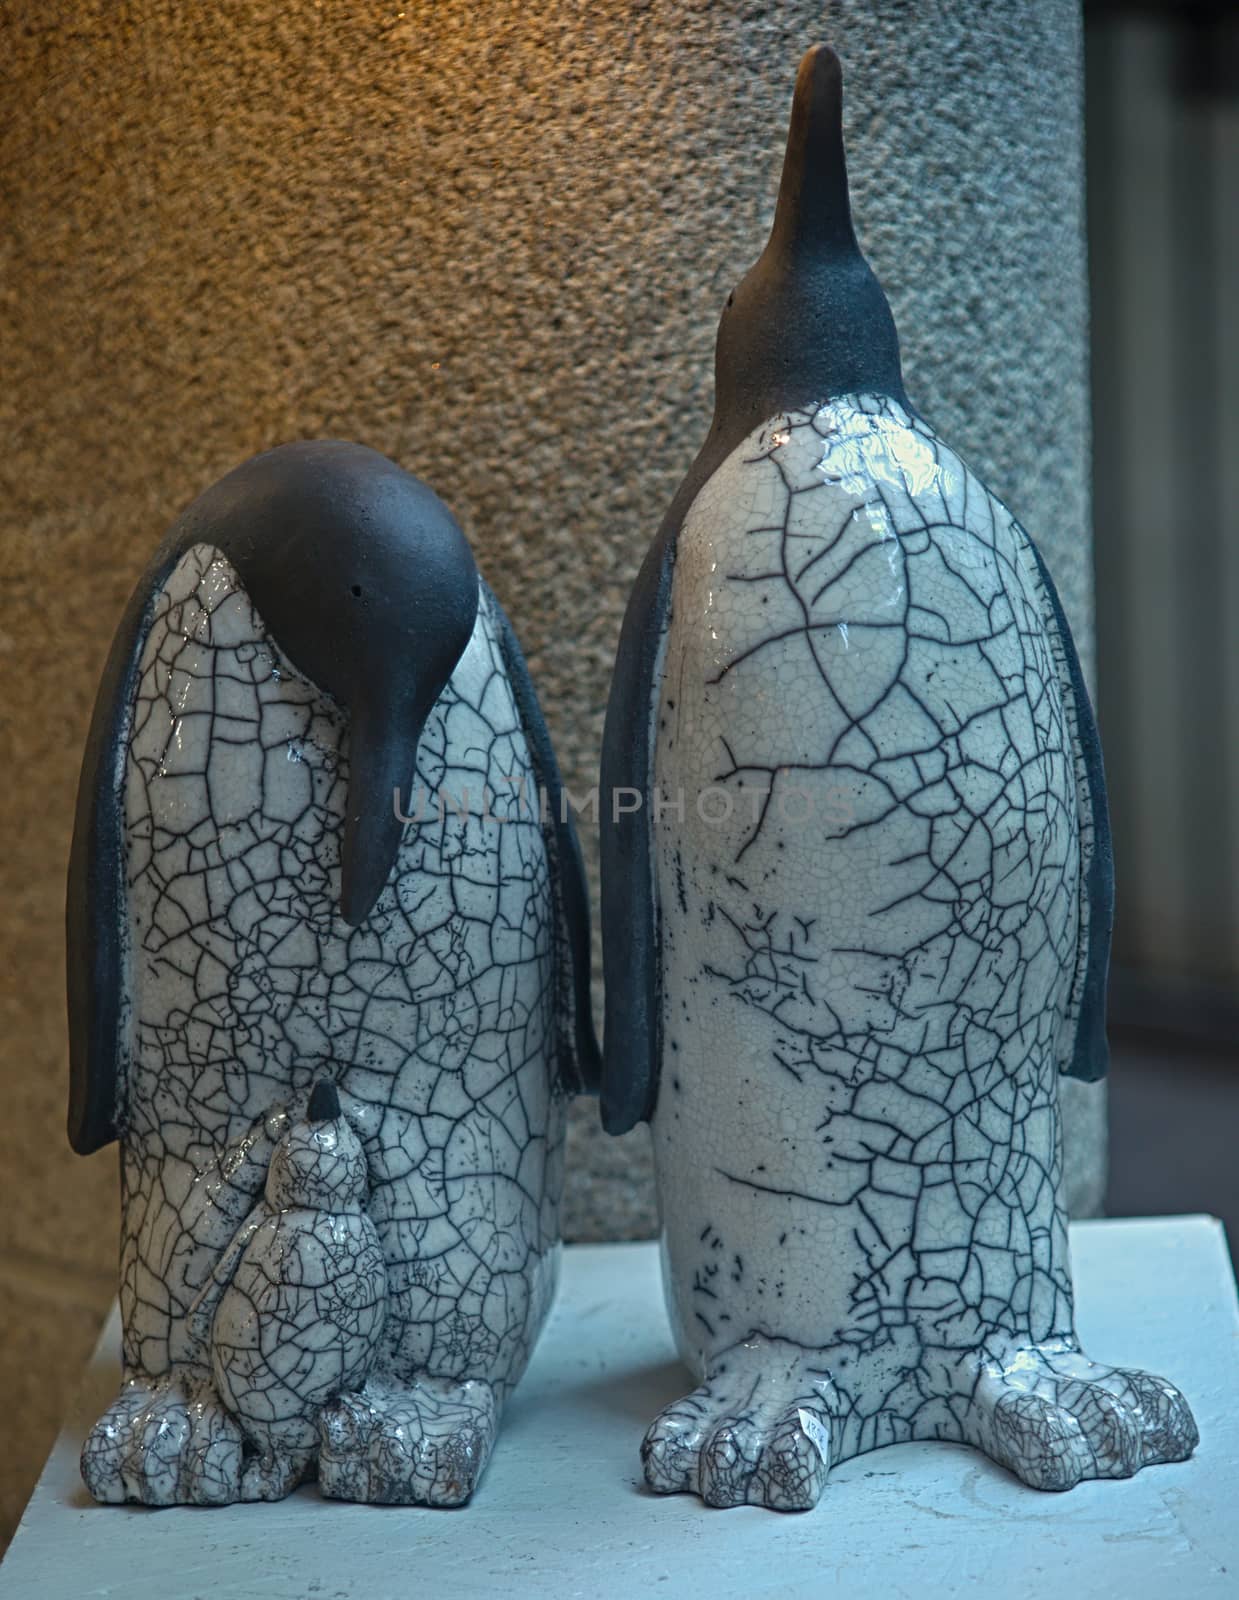 Ceramic figurines of penguins on wooden shelf by sheriffkule